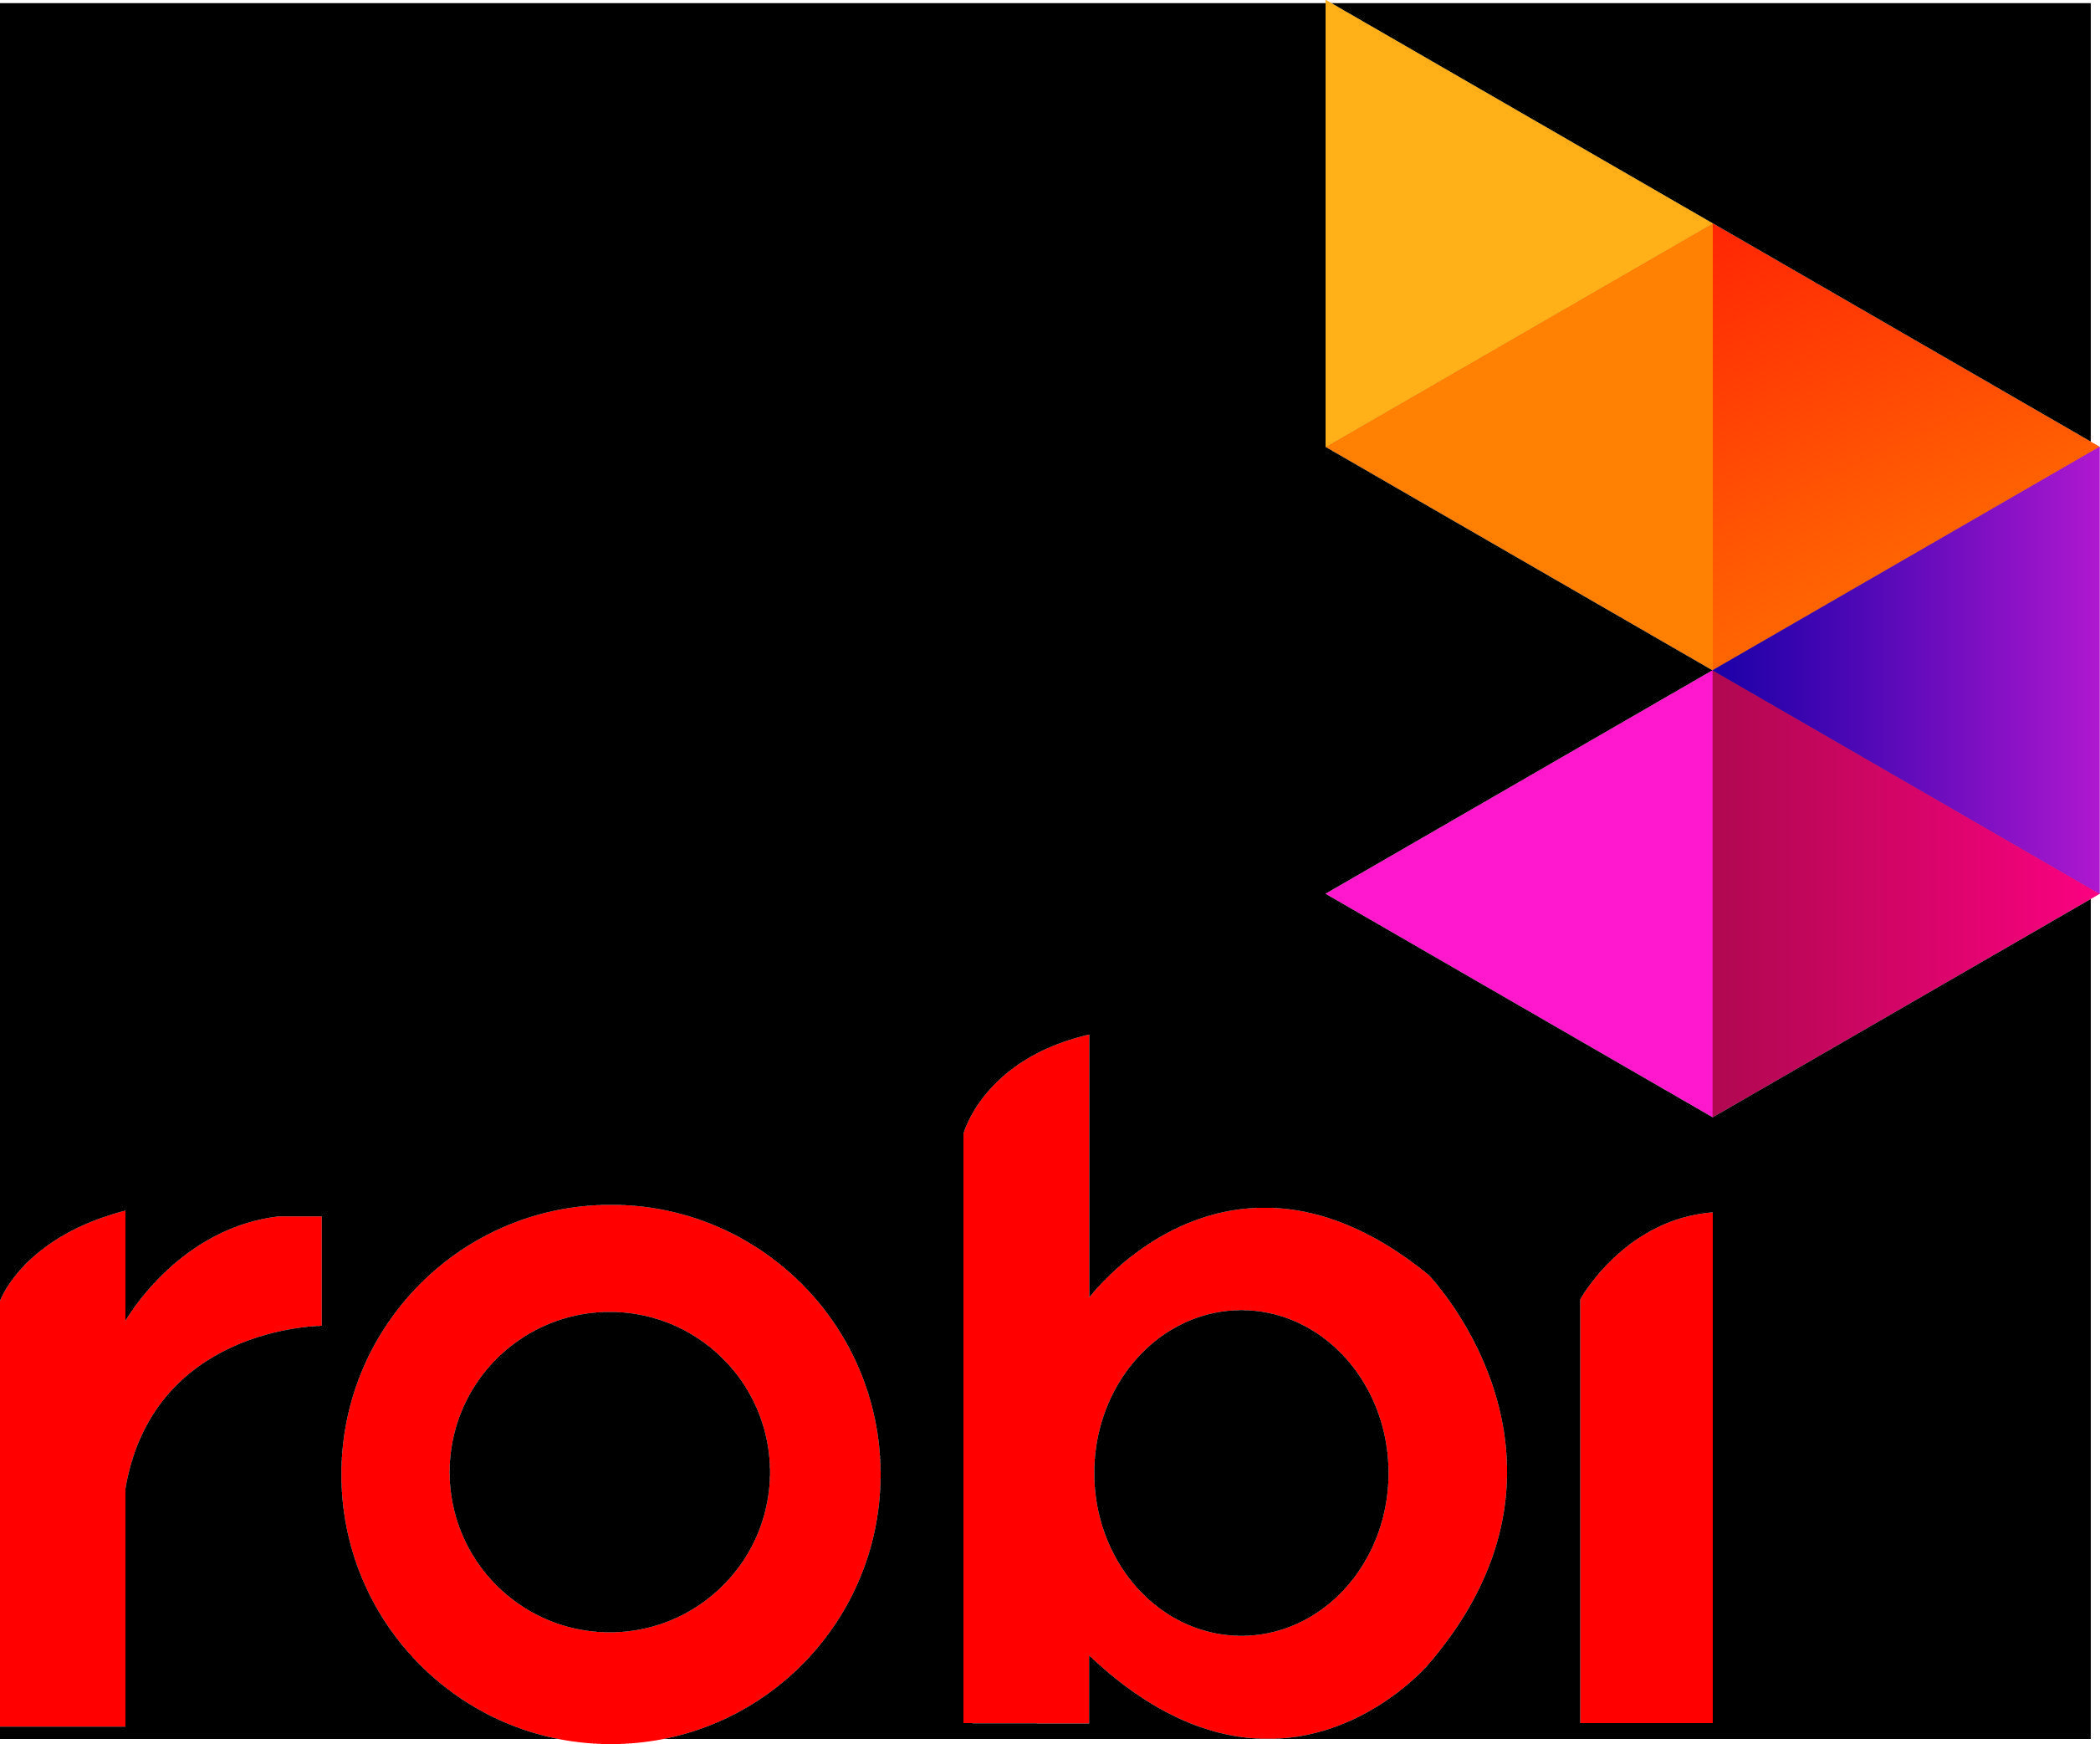 Robi Logo - Robi logo